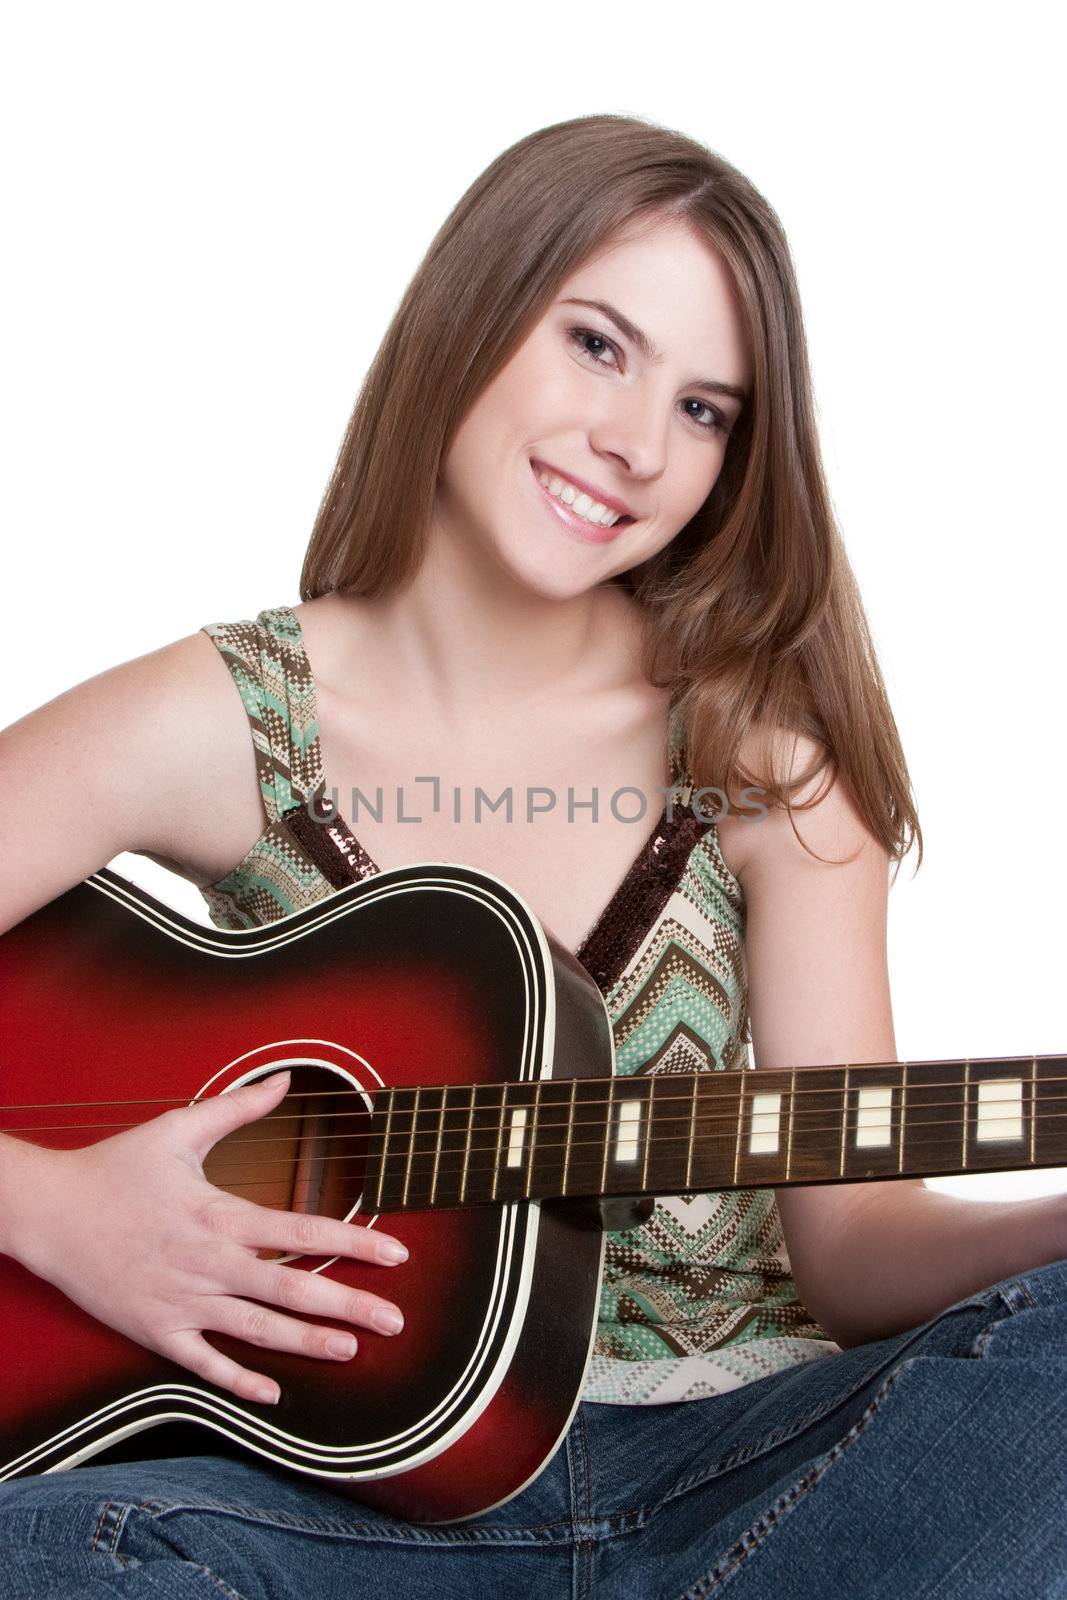 Girl Playing Guitar by keeweeboy